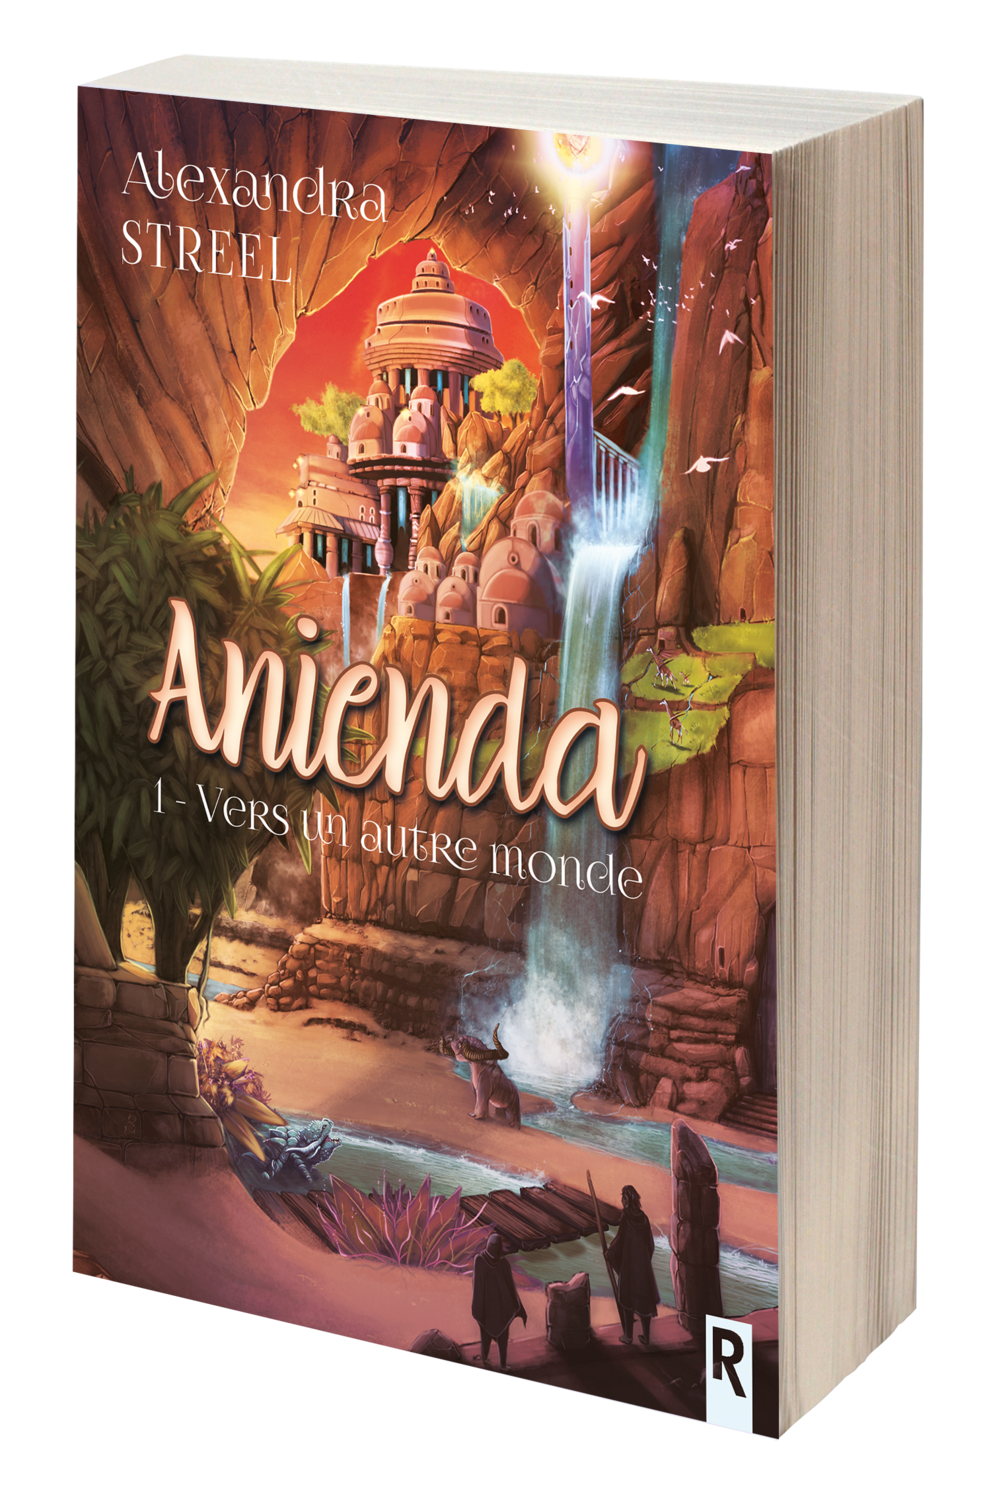 Anienda : 1 - Vers un autre monde - Alexandra STREEL